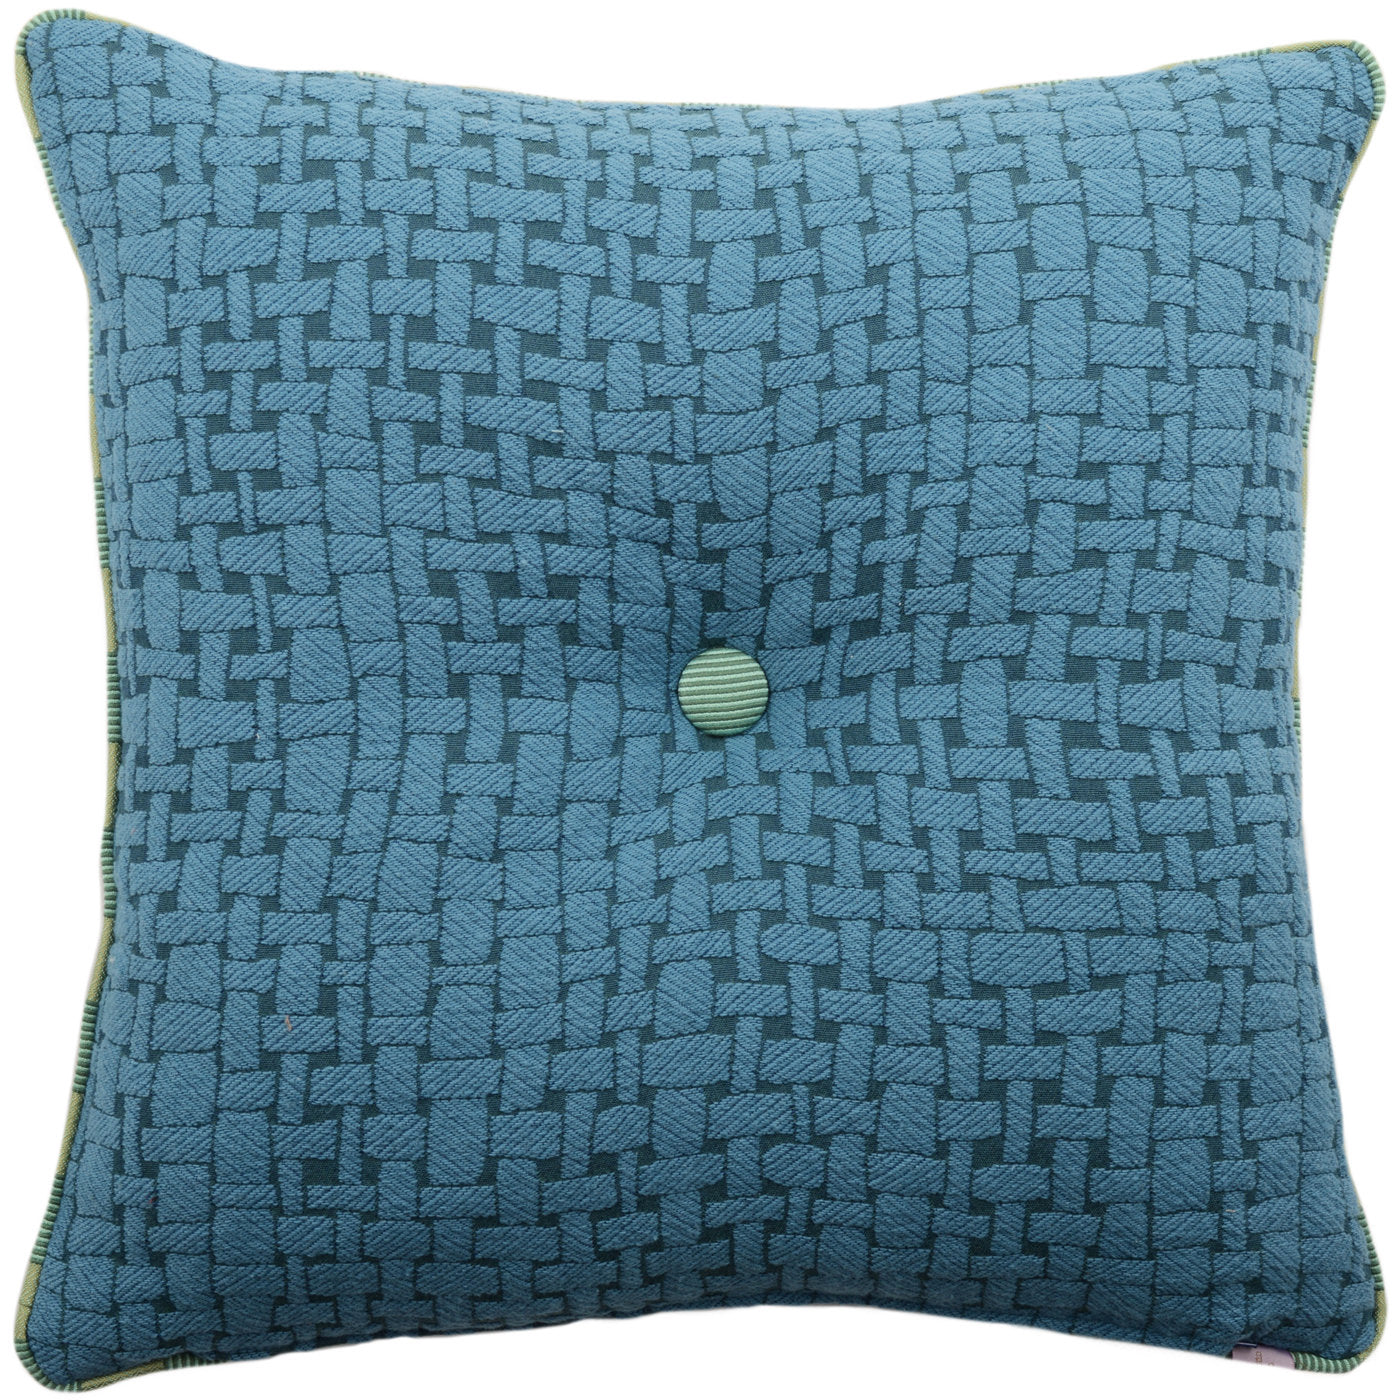 Light Blue Carré Cushion in floreal jacquard fabric - Alternative view 1